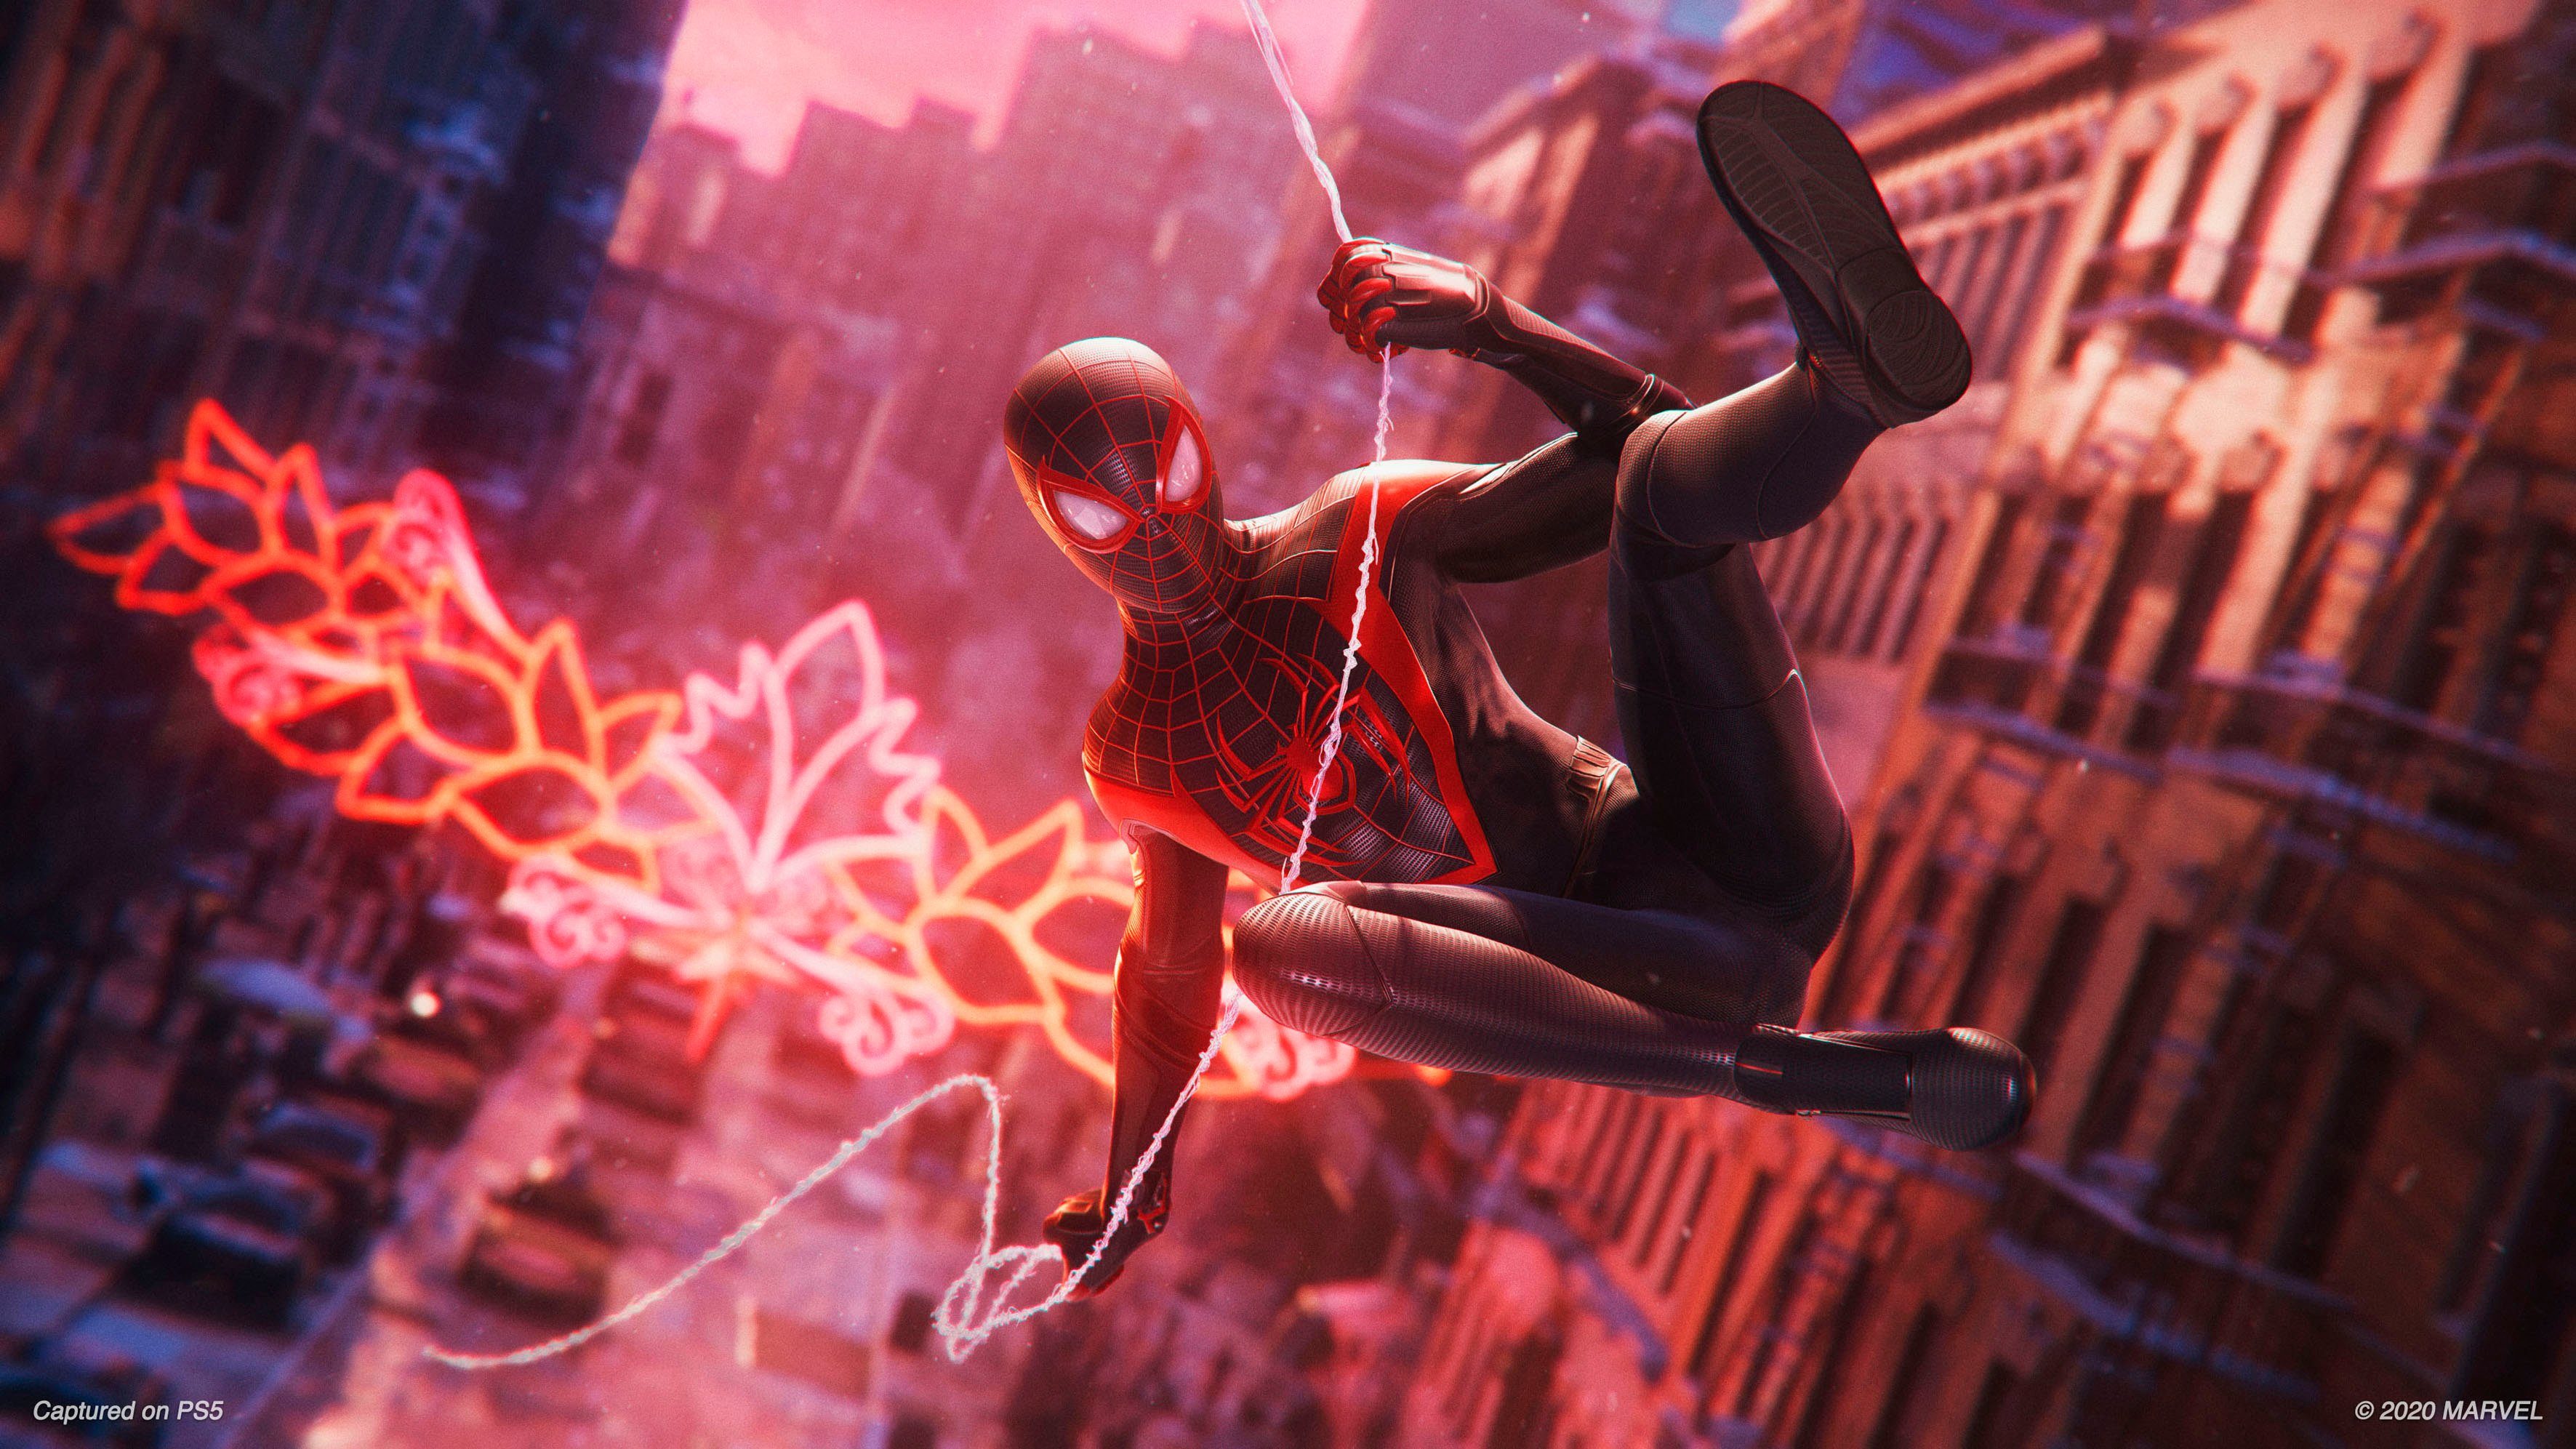 Marvel's Spider-Man: Miles Morales 5 PlayStation